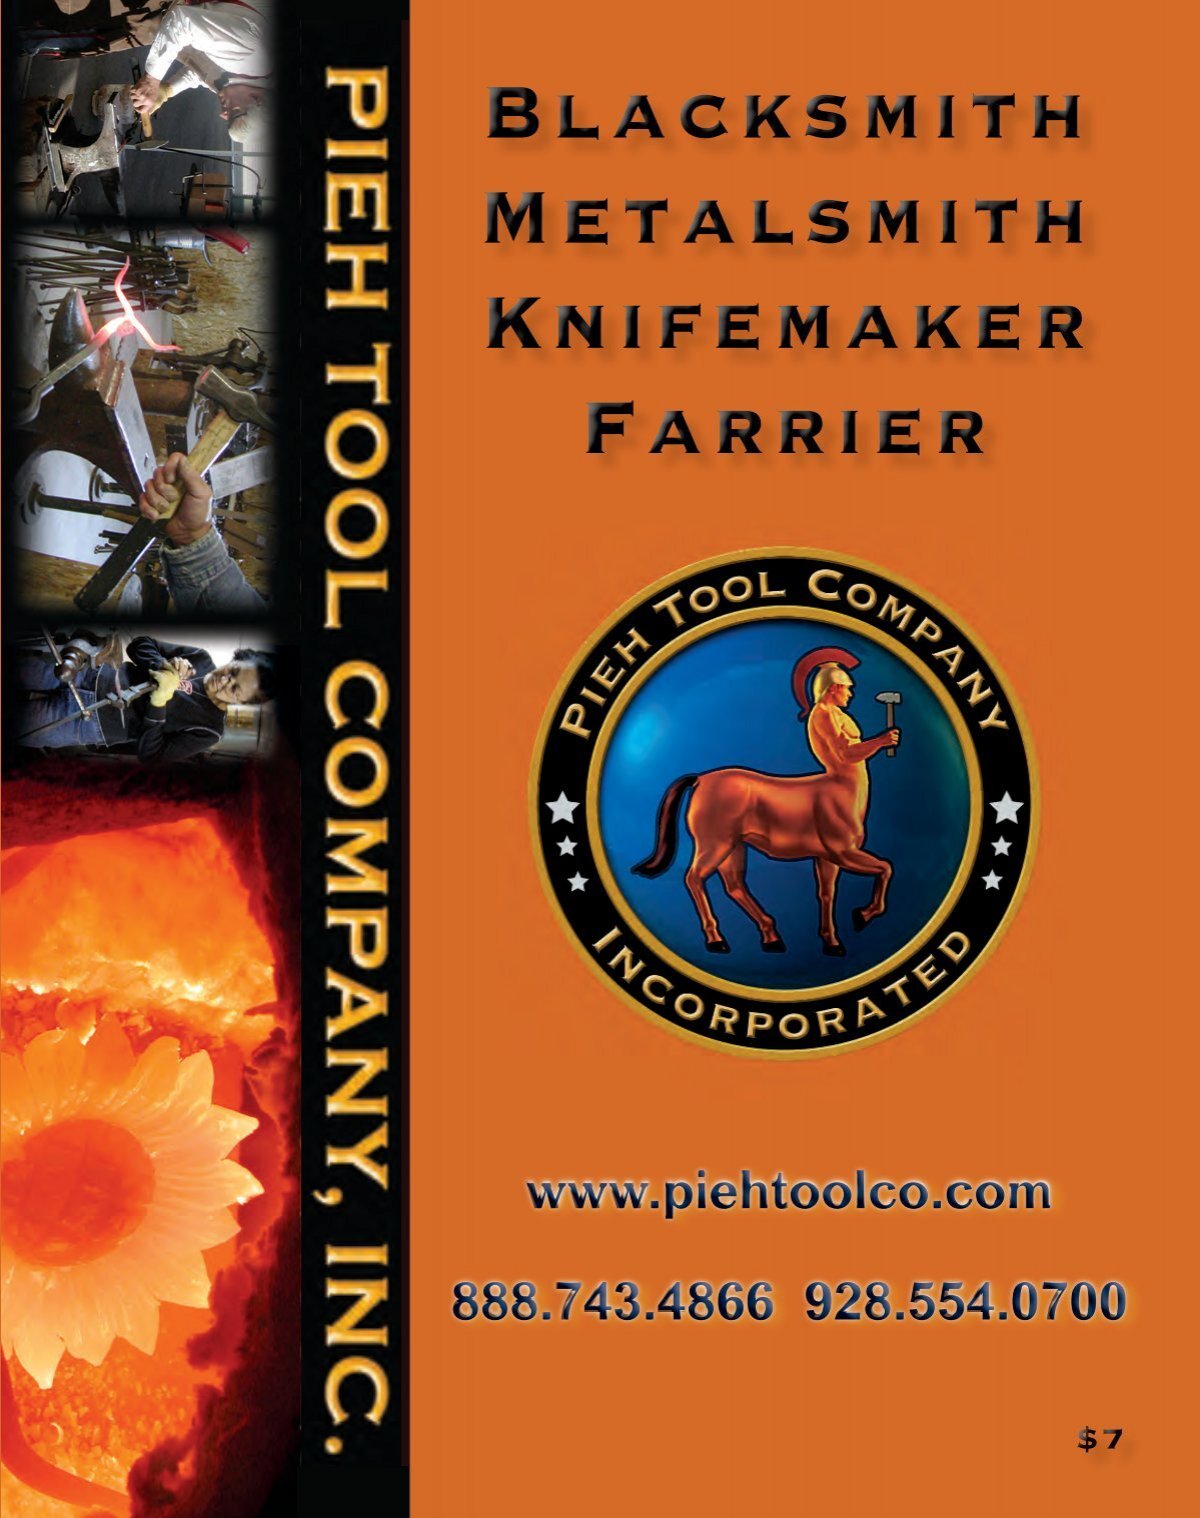 Blacksmith Metalsmith Knifemaker Farrier Blacksmith  - Pieh Tool